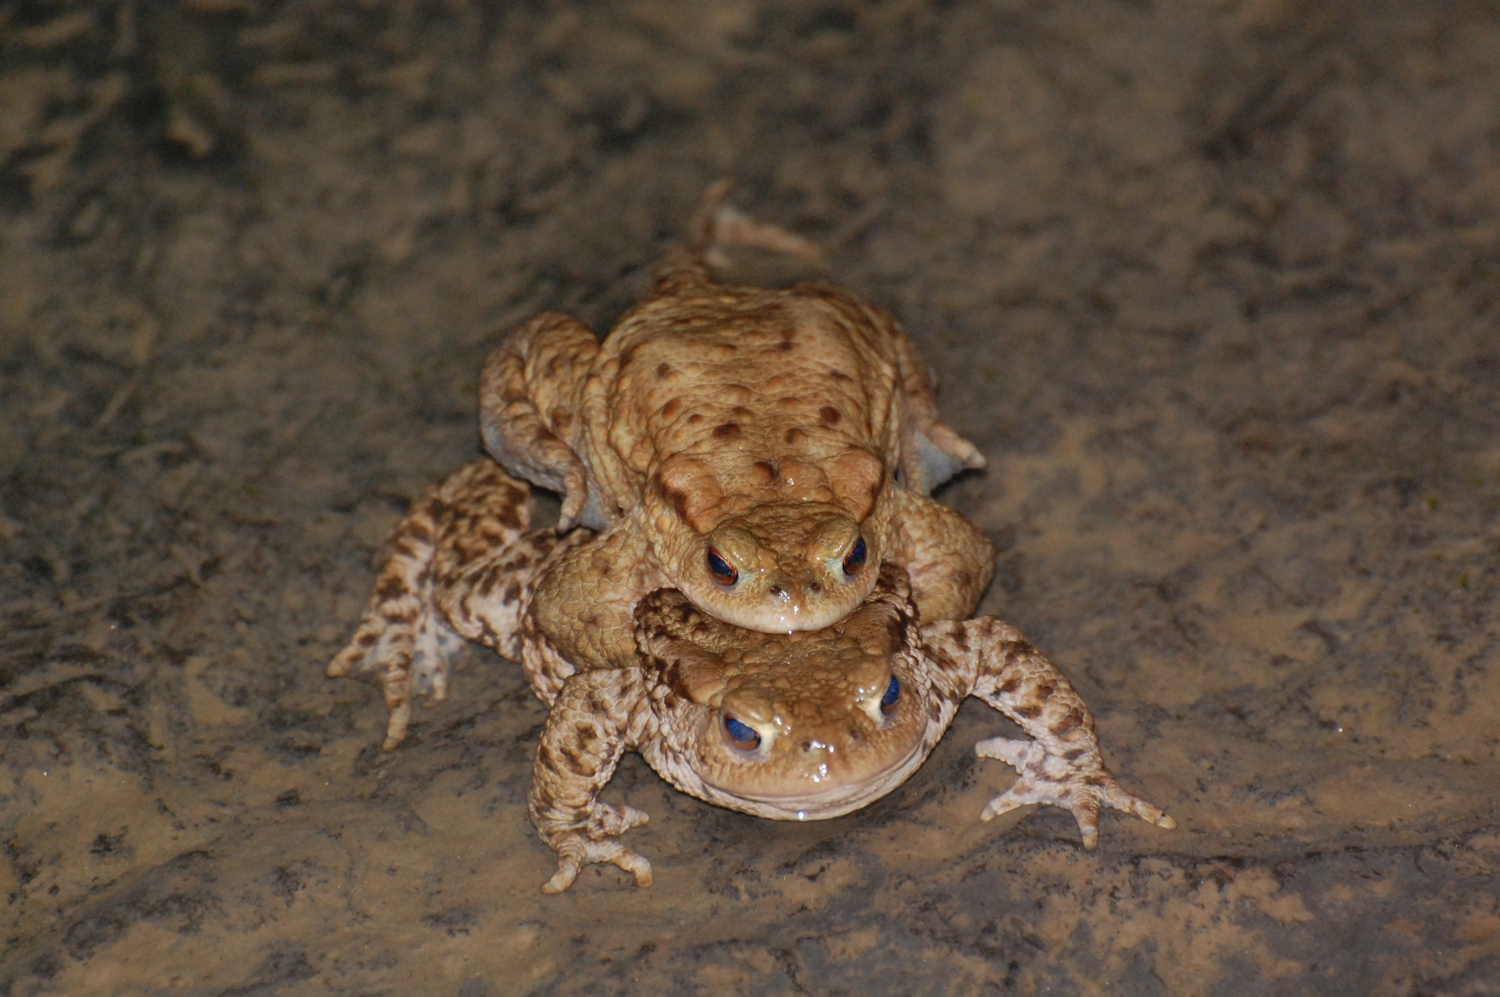 Toads breeding